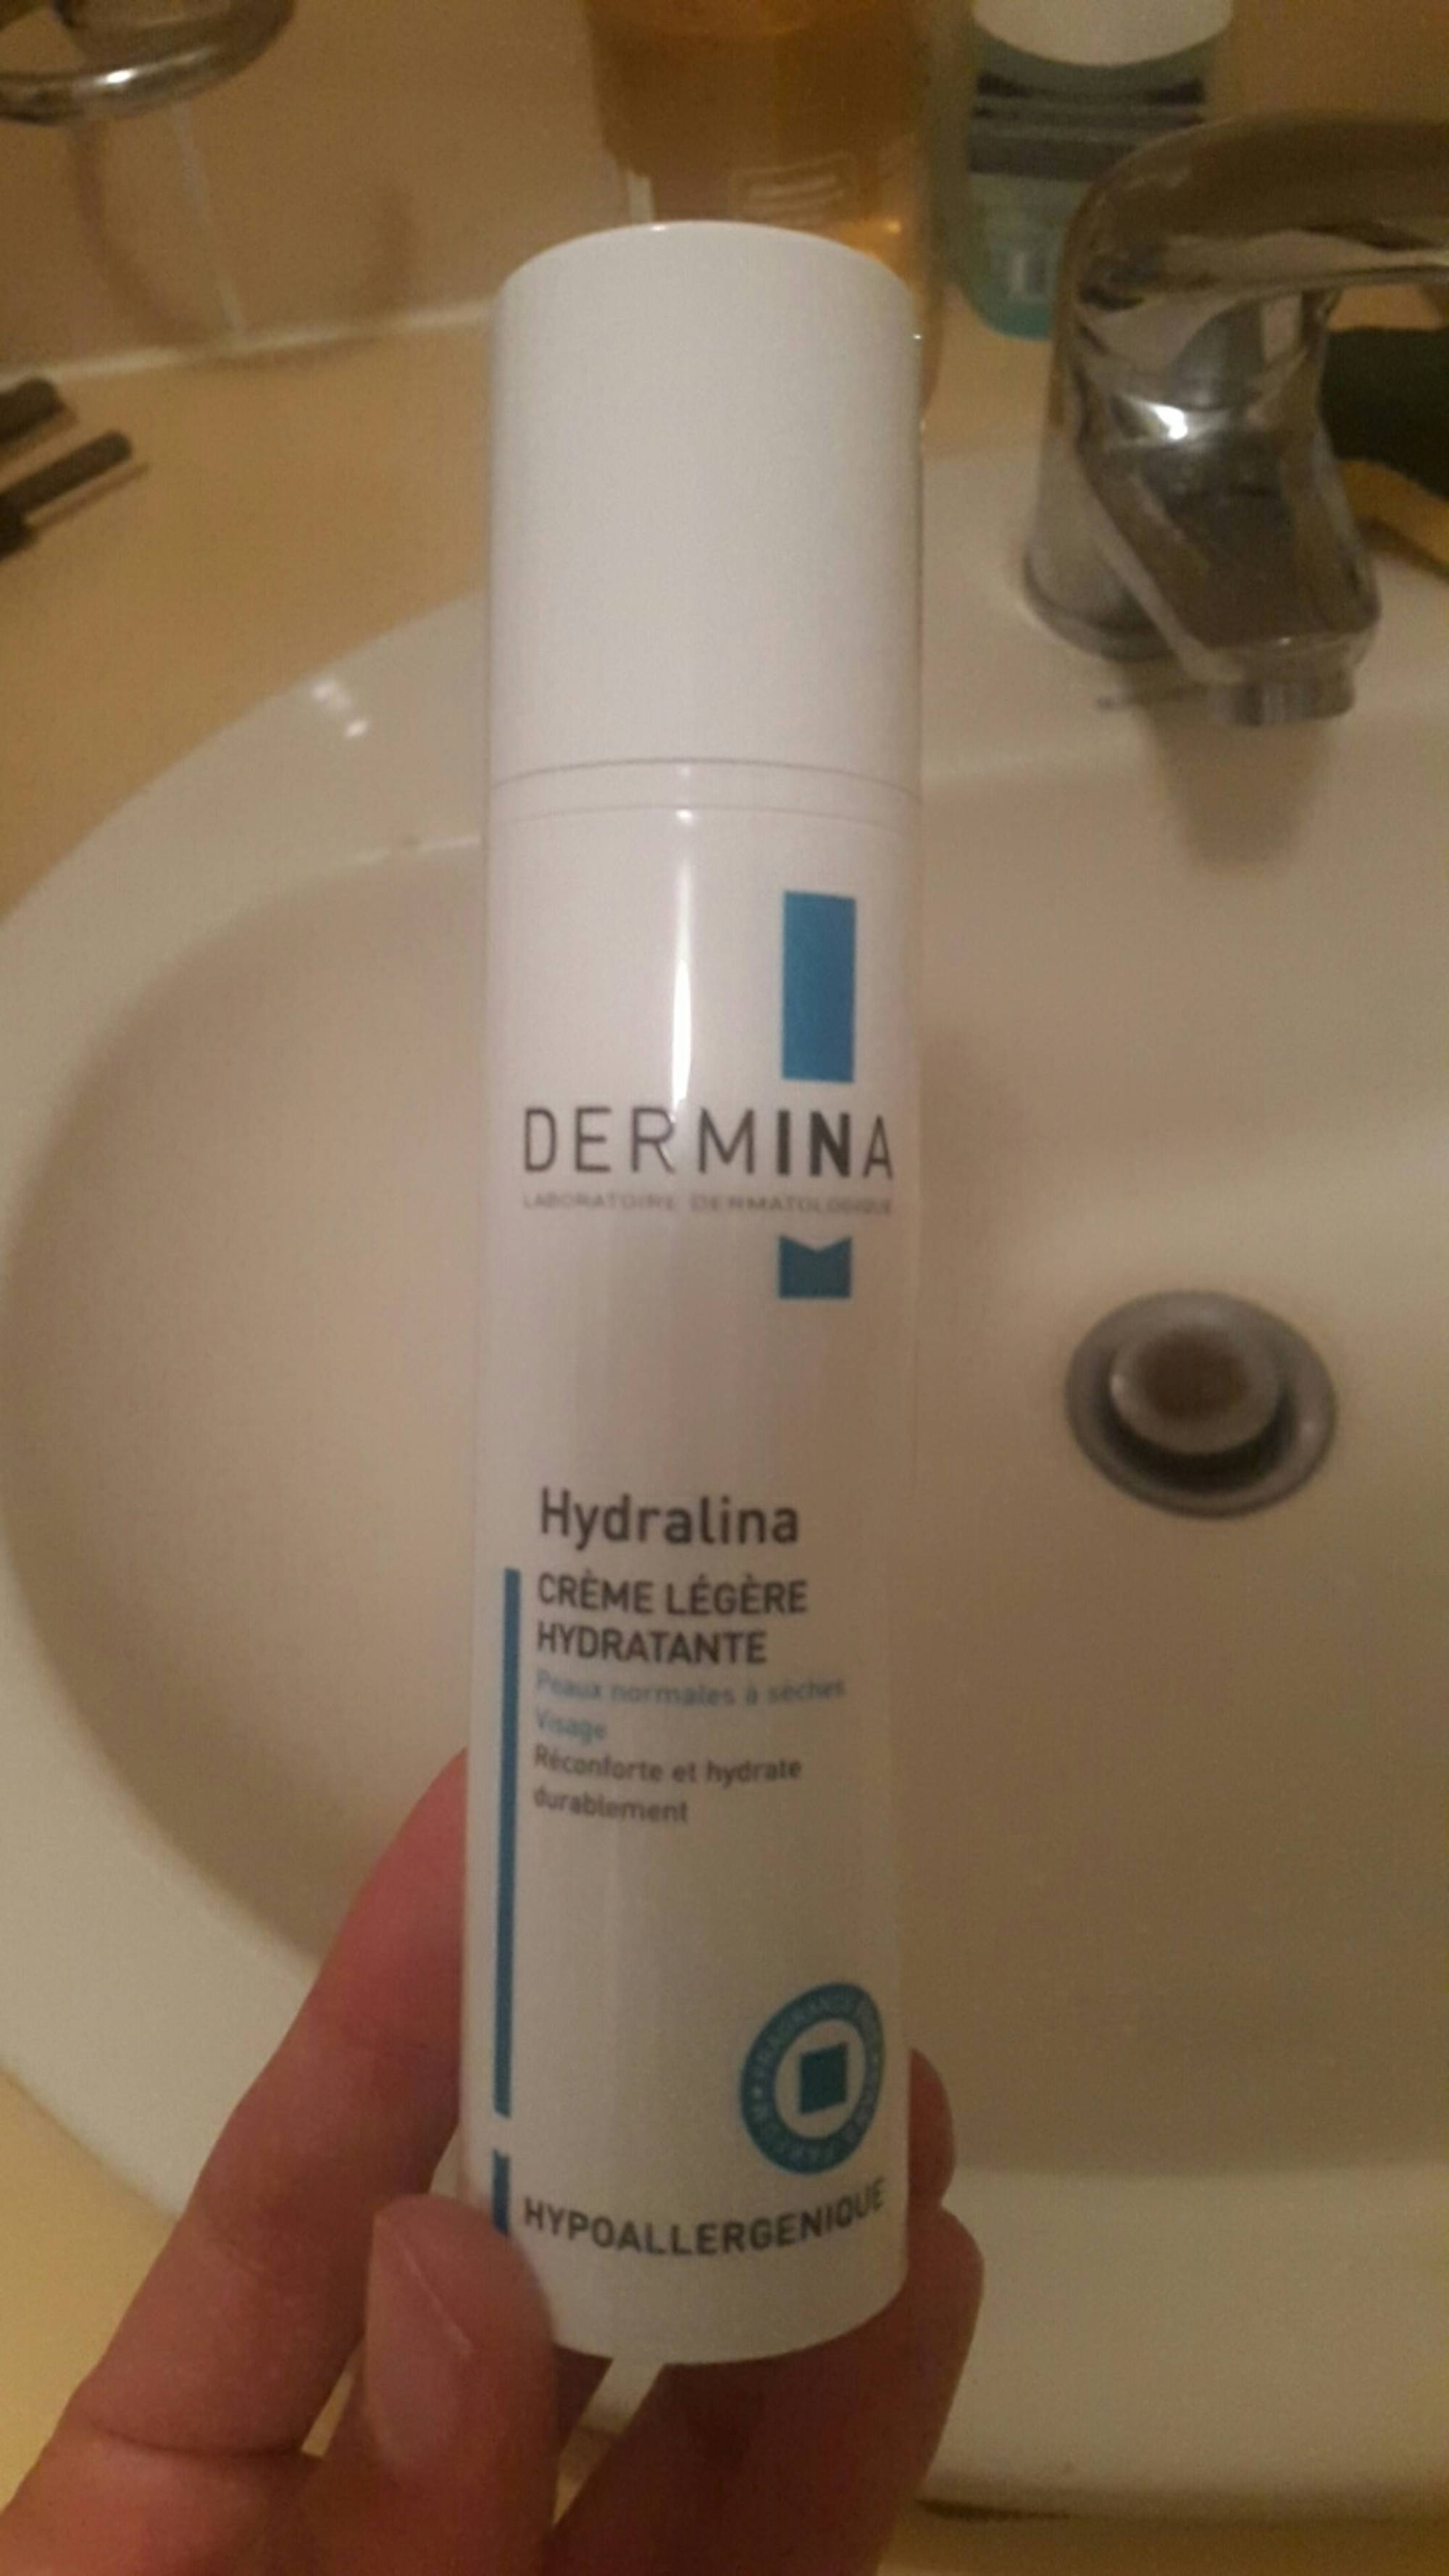 DERMINA - Hydralina - Crème légère hydratante